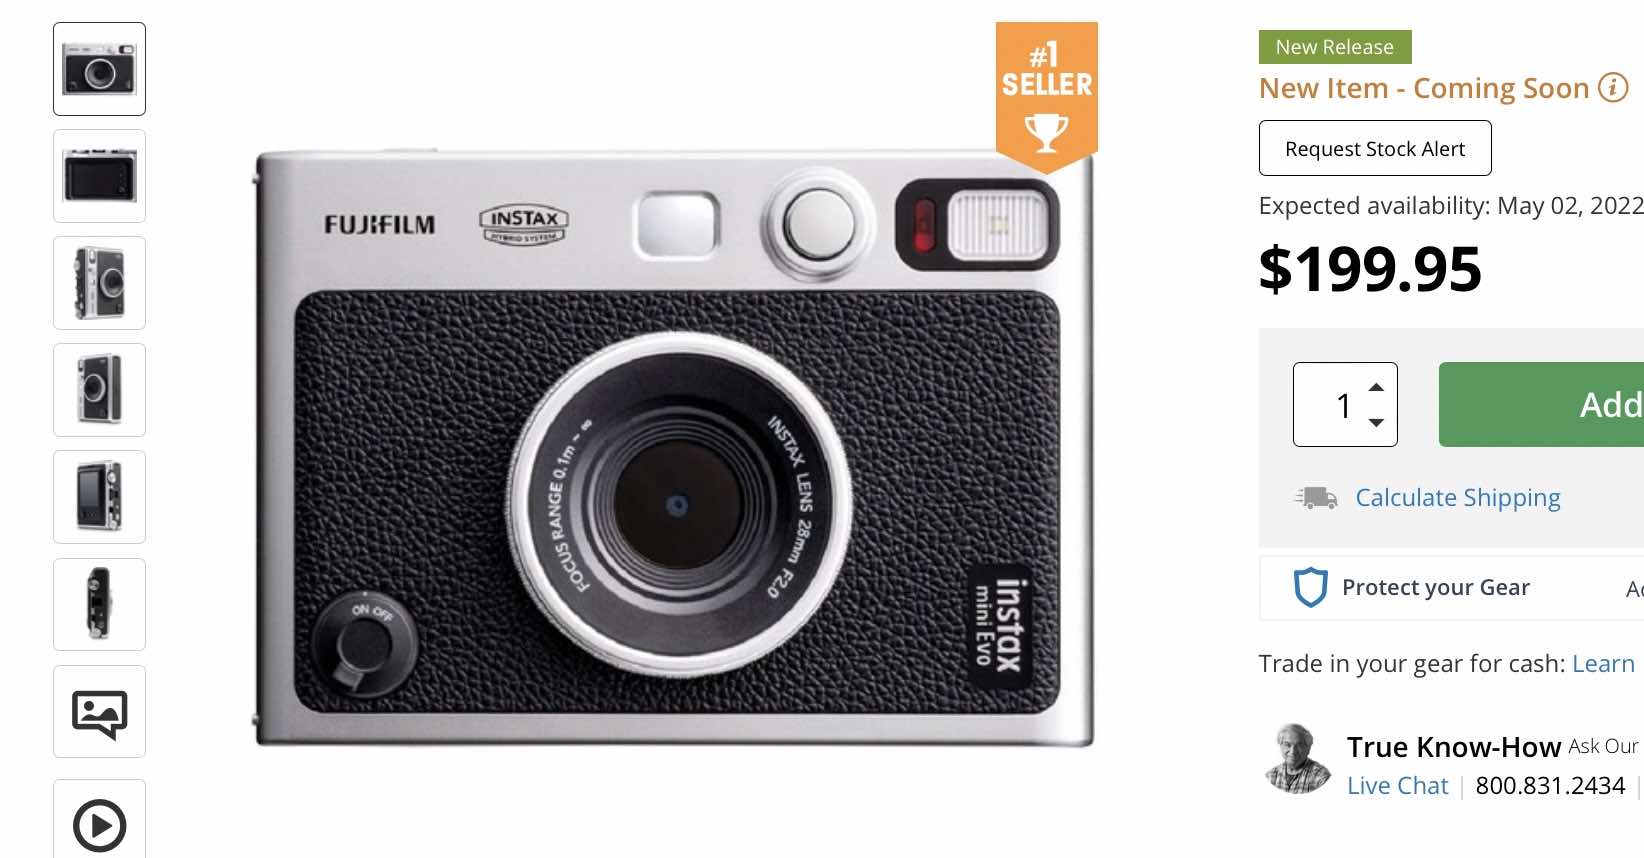 Fujifilm launches Hybrid Instant Camera “Instax Mini Evo” - Fuji Rumors